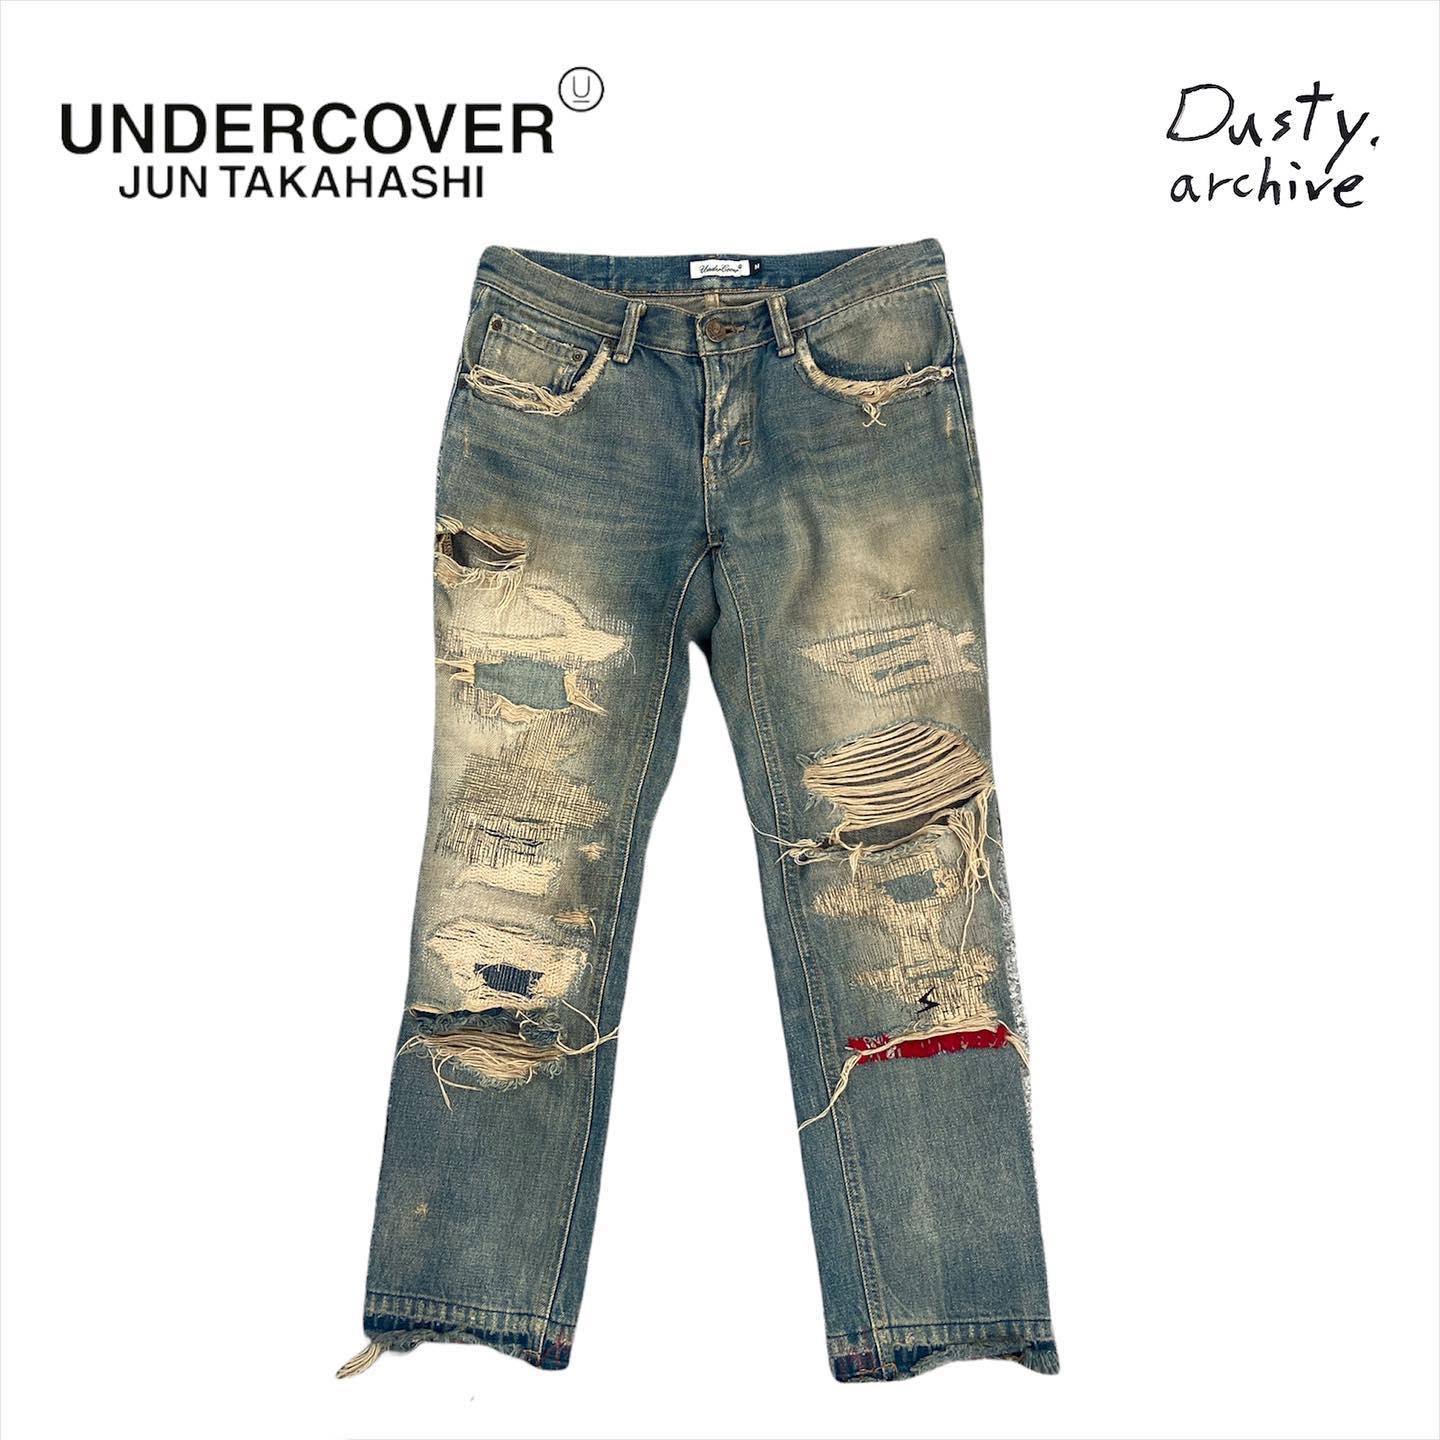 Undercover 68 denim M – Dusty Archive